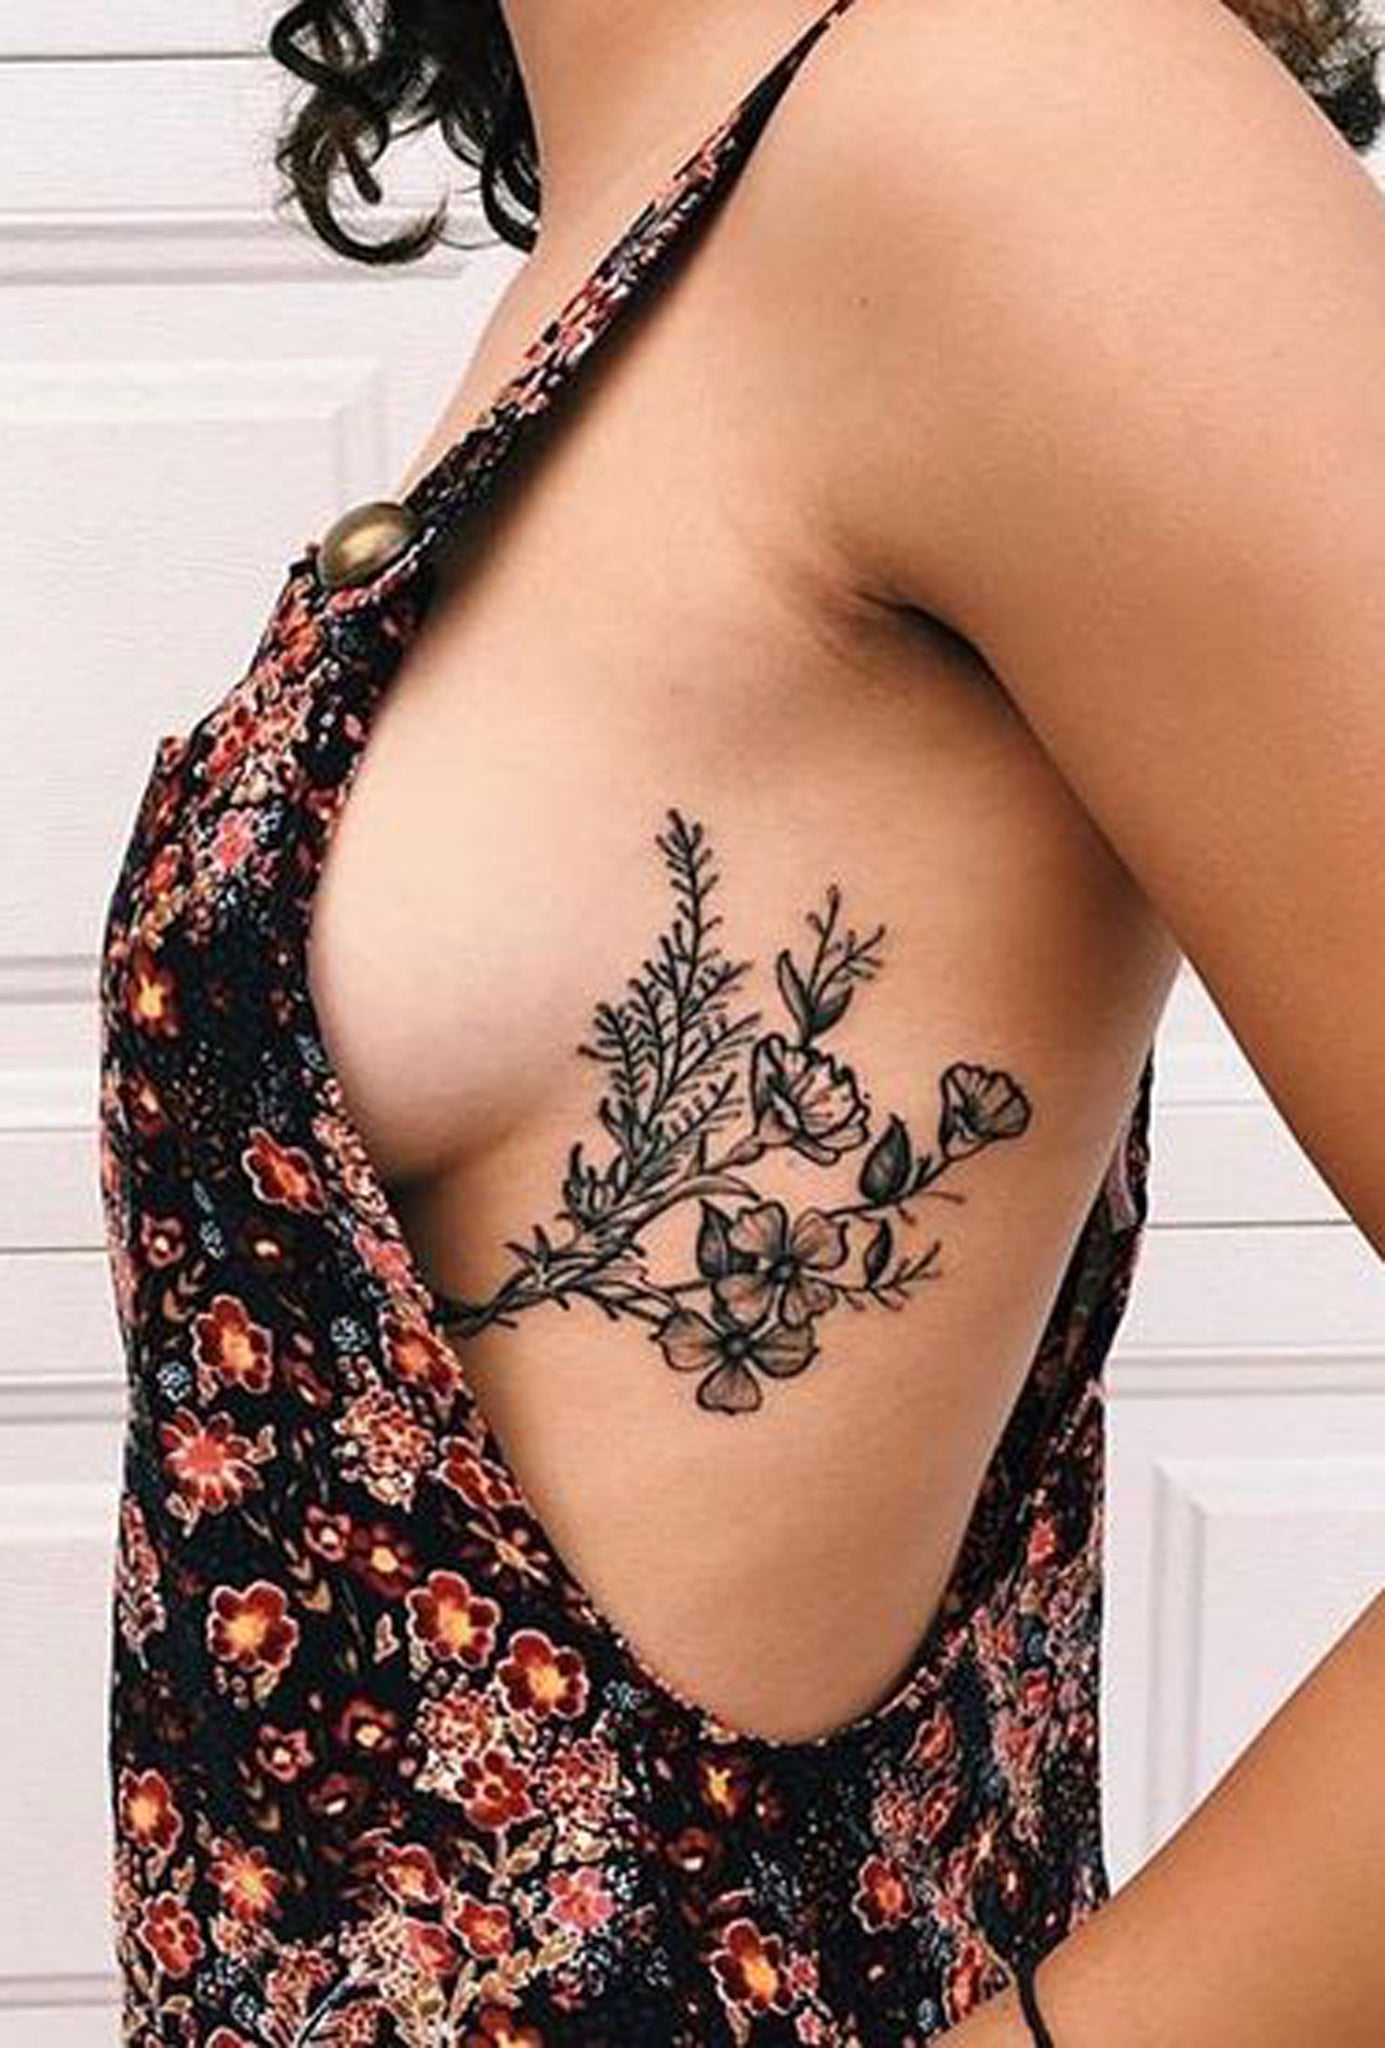 Wild Realistic Rose Rib Cage Tattoo Ideas for Women - Black Flower Underboob idées de tatouage pour les femmes - www.MyBodiArt.com